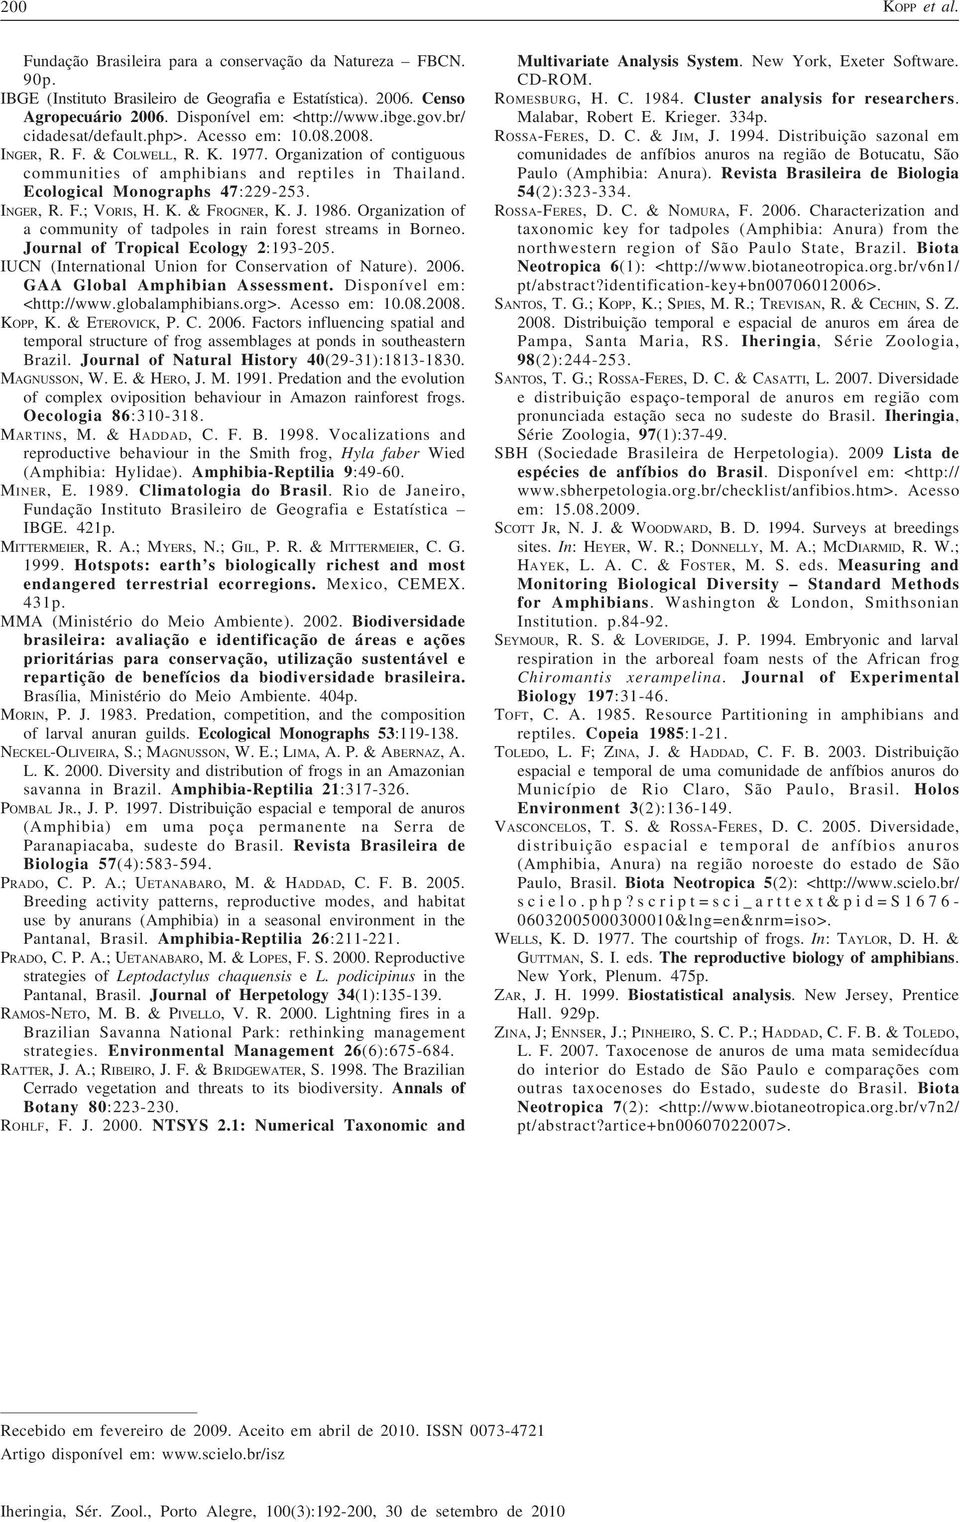 INGER, R. F.; VORIS, H. K. & FROGNER, K. J. 1986. Organization of a community of tadpoles in rain forest streams in Borneo. Journal of Tropical Ecology 2:193-205.